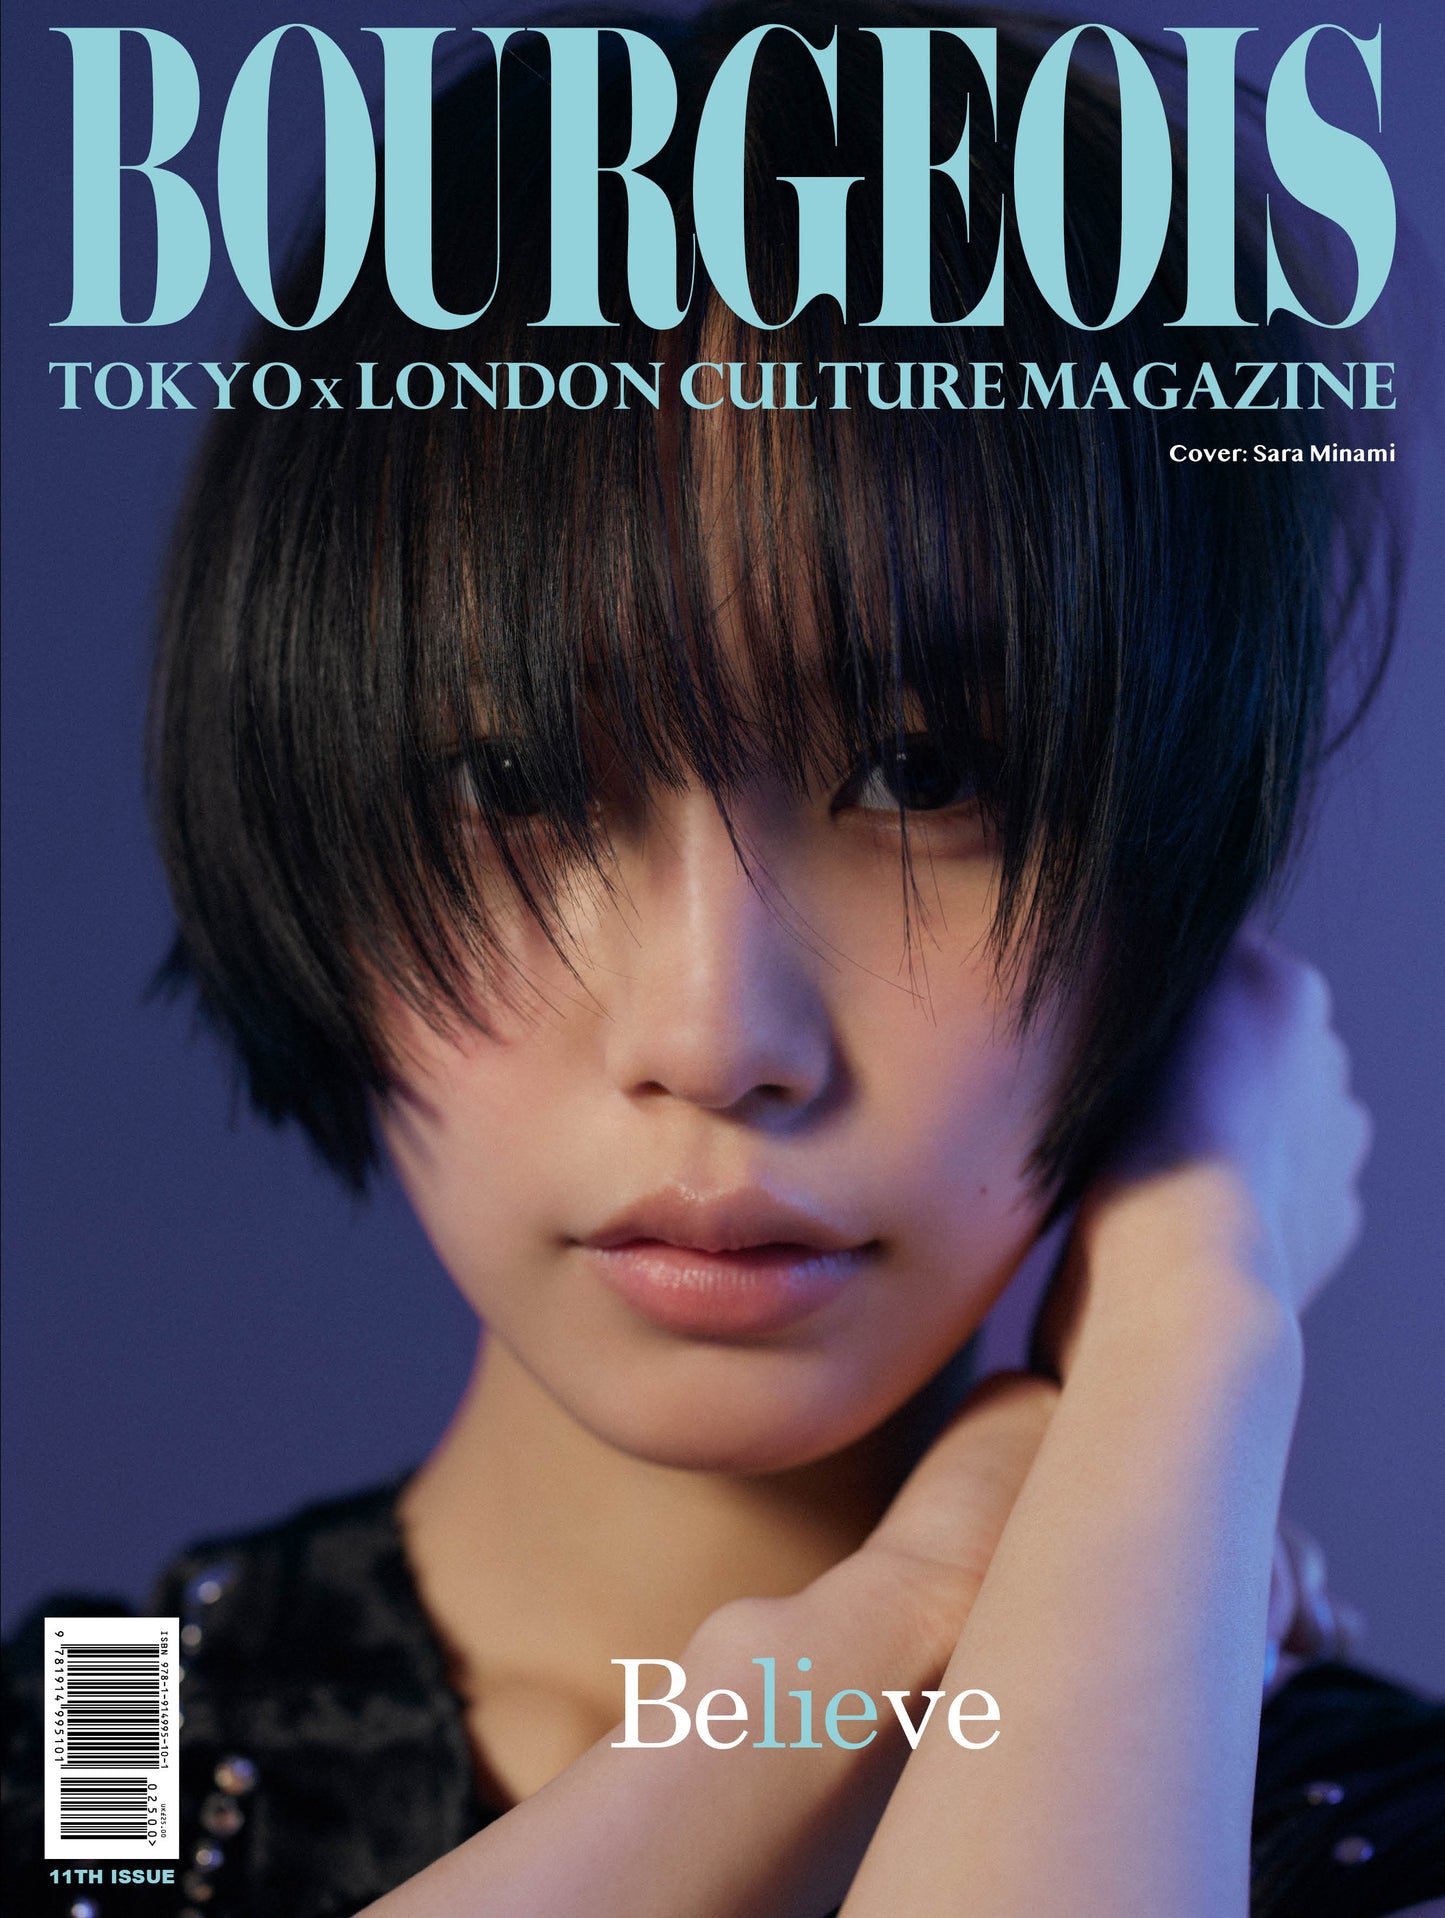 BOURGEOIS VOL.11 COVER : SARA MINAMI/YUTA TAMAMORI